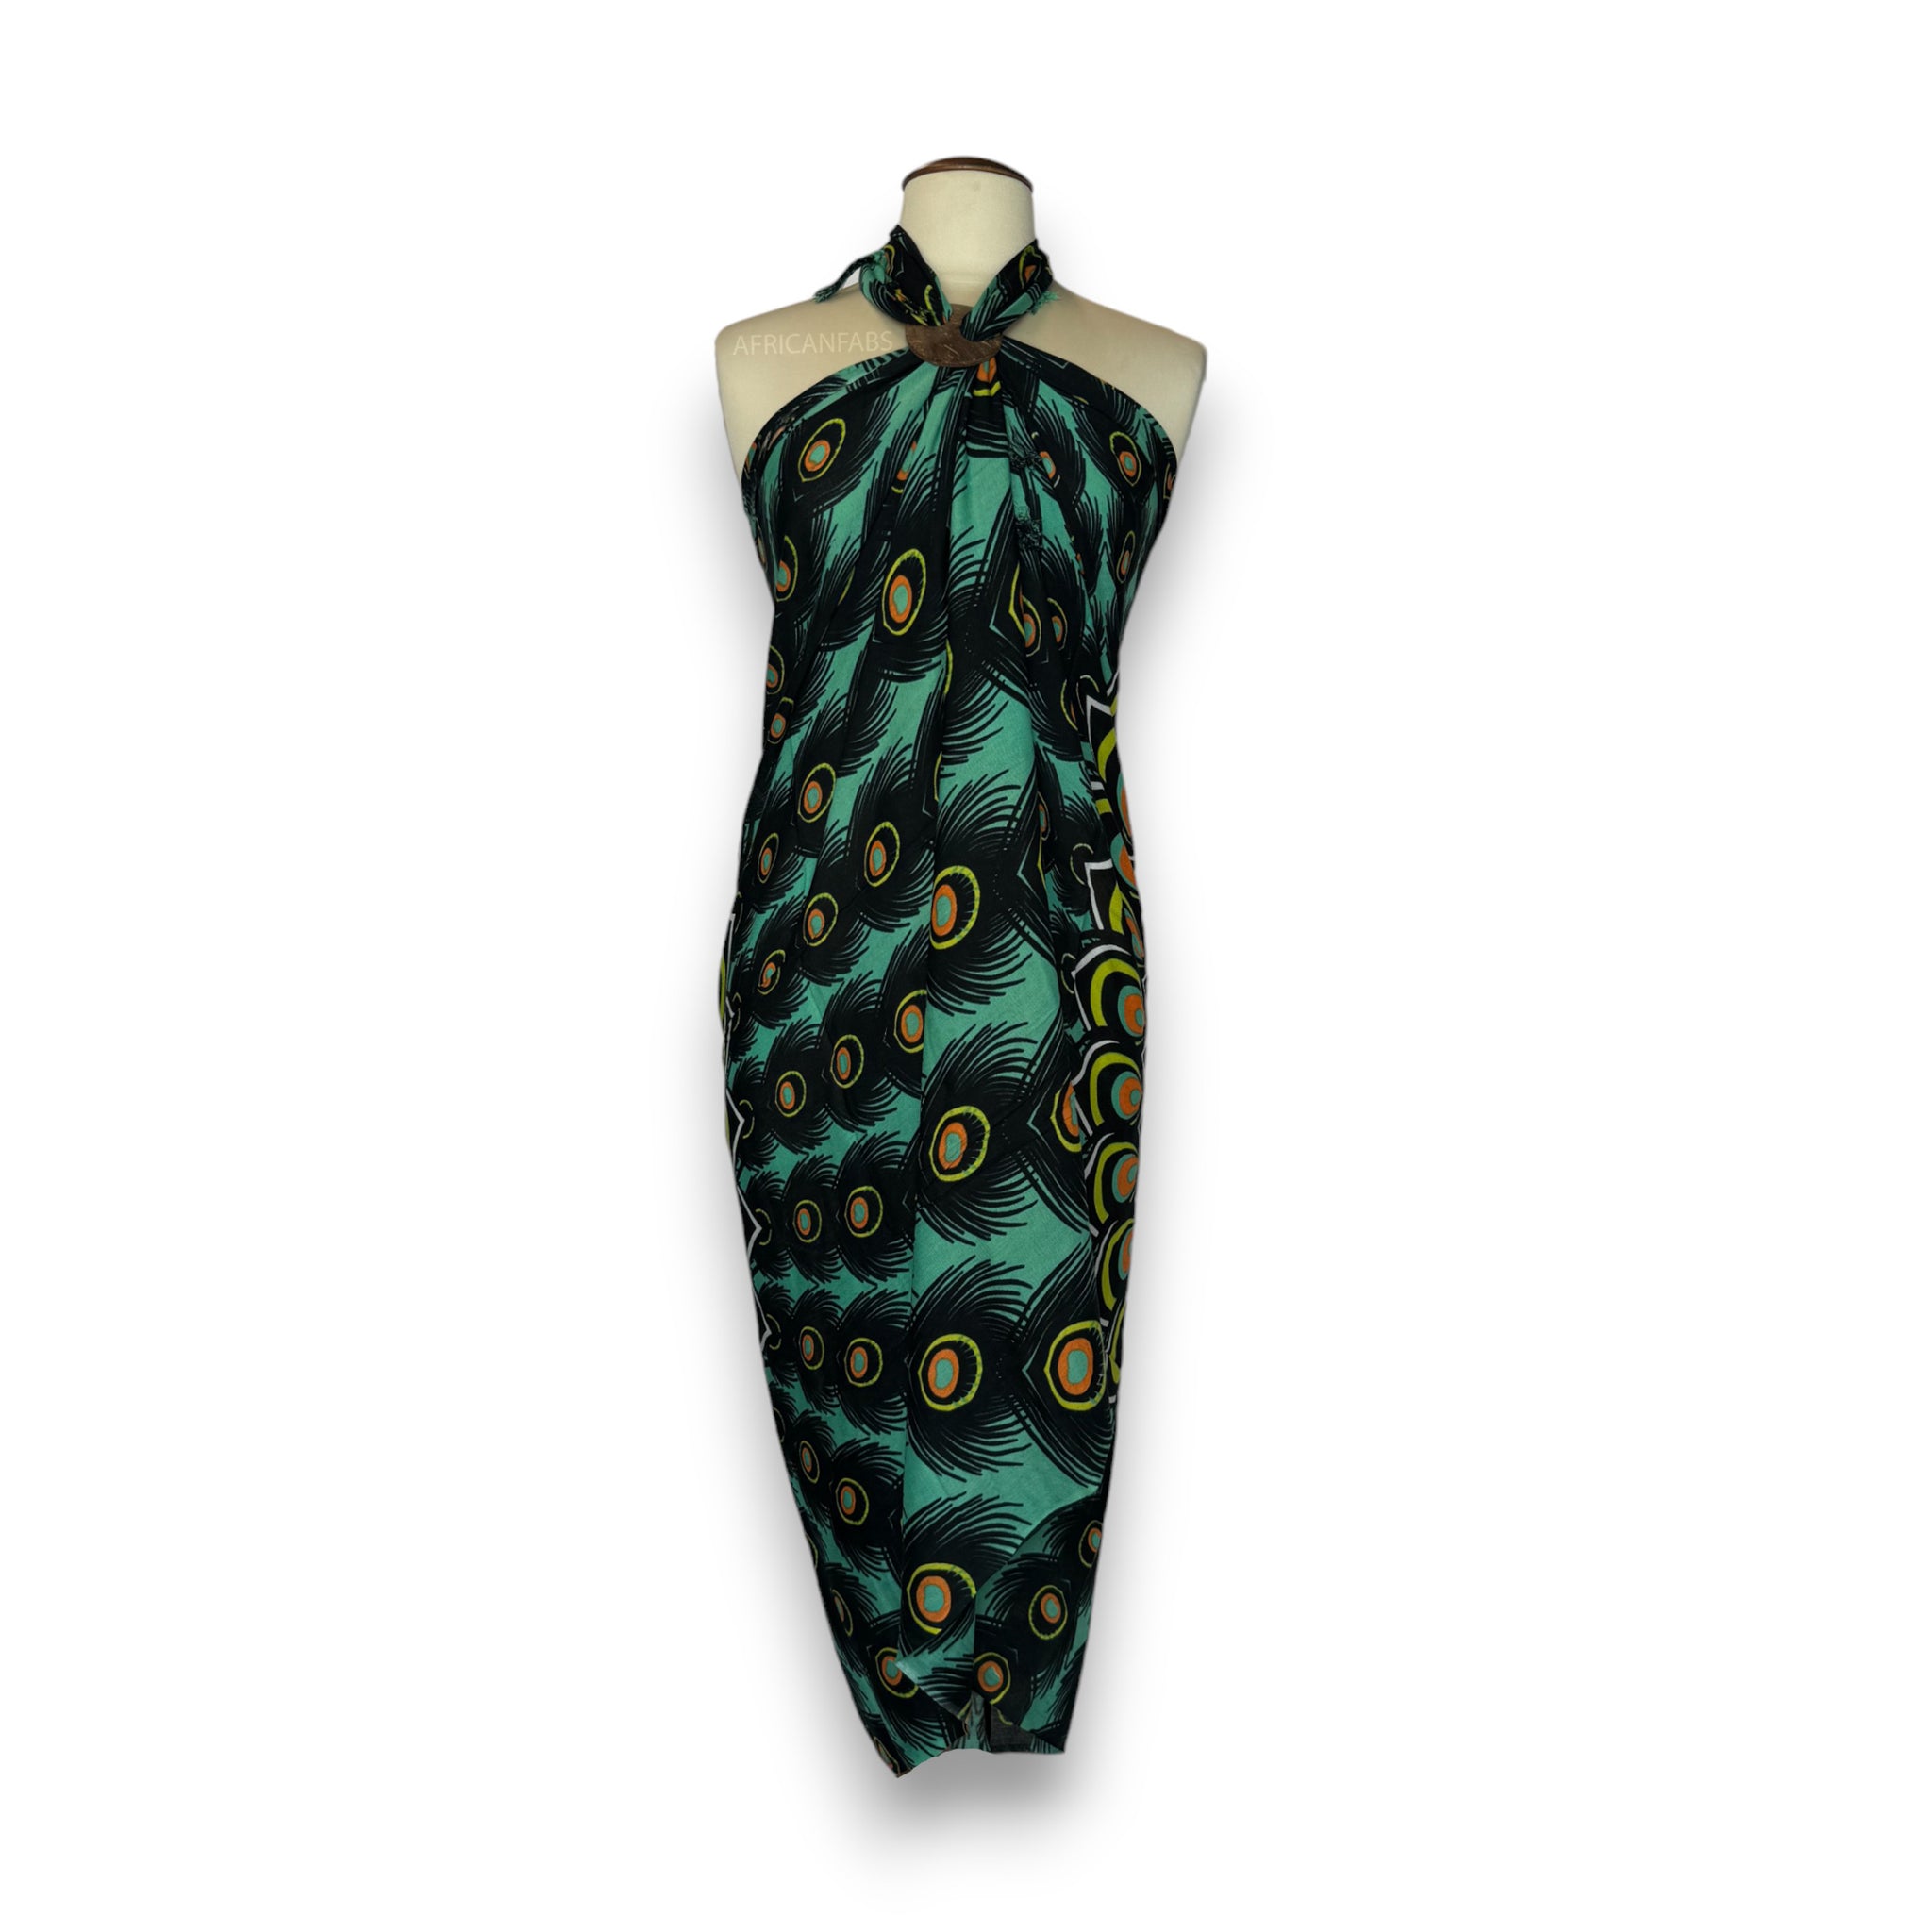 Sarong / pareo - Beachwear wrap skirt - Peacock green